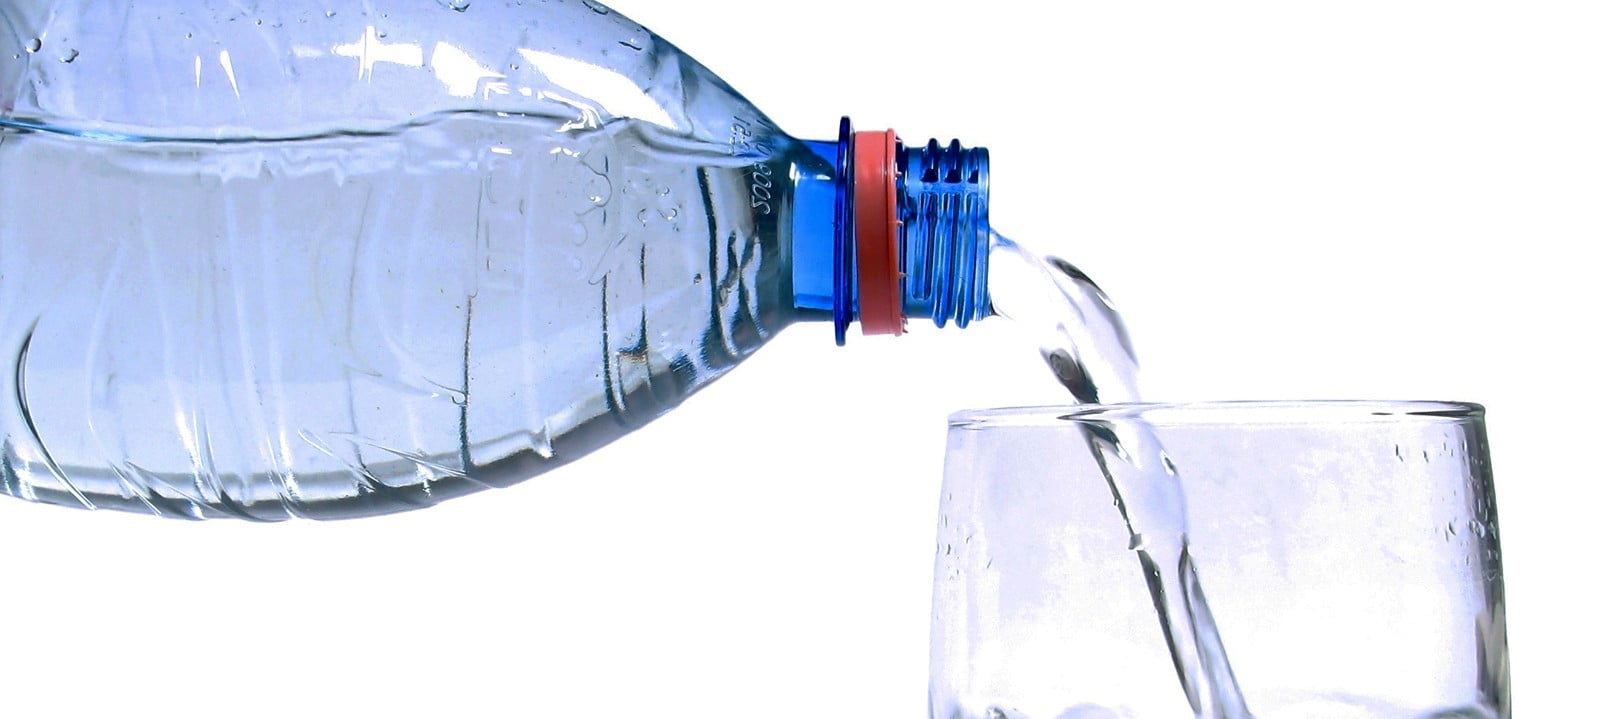 Drinking Water Pet To Glass E1444459345293 مجلة نقطة العلمية